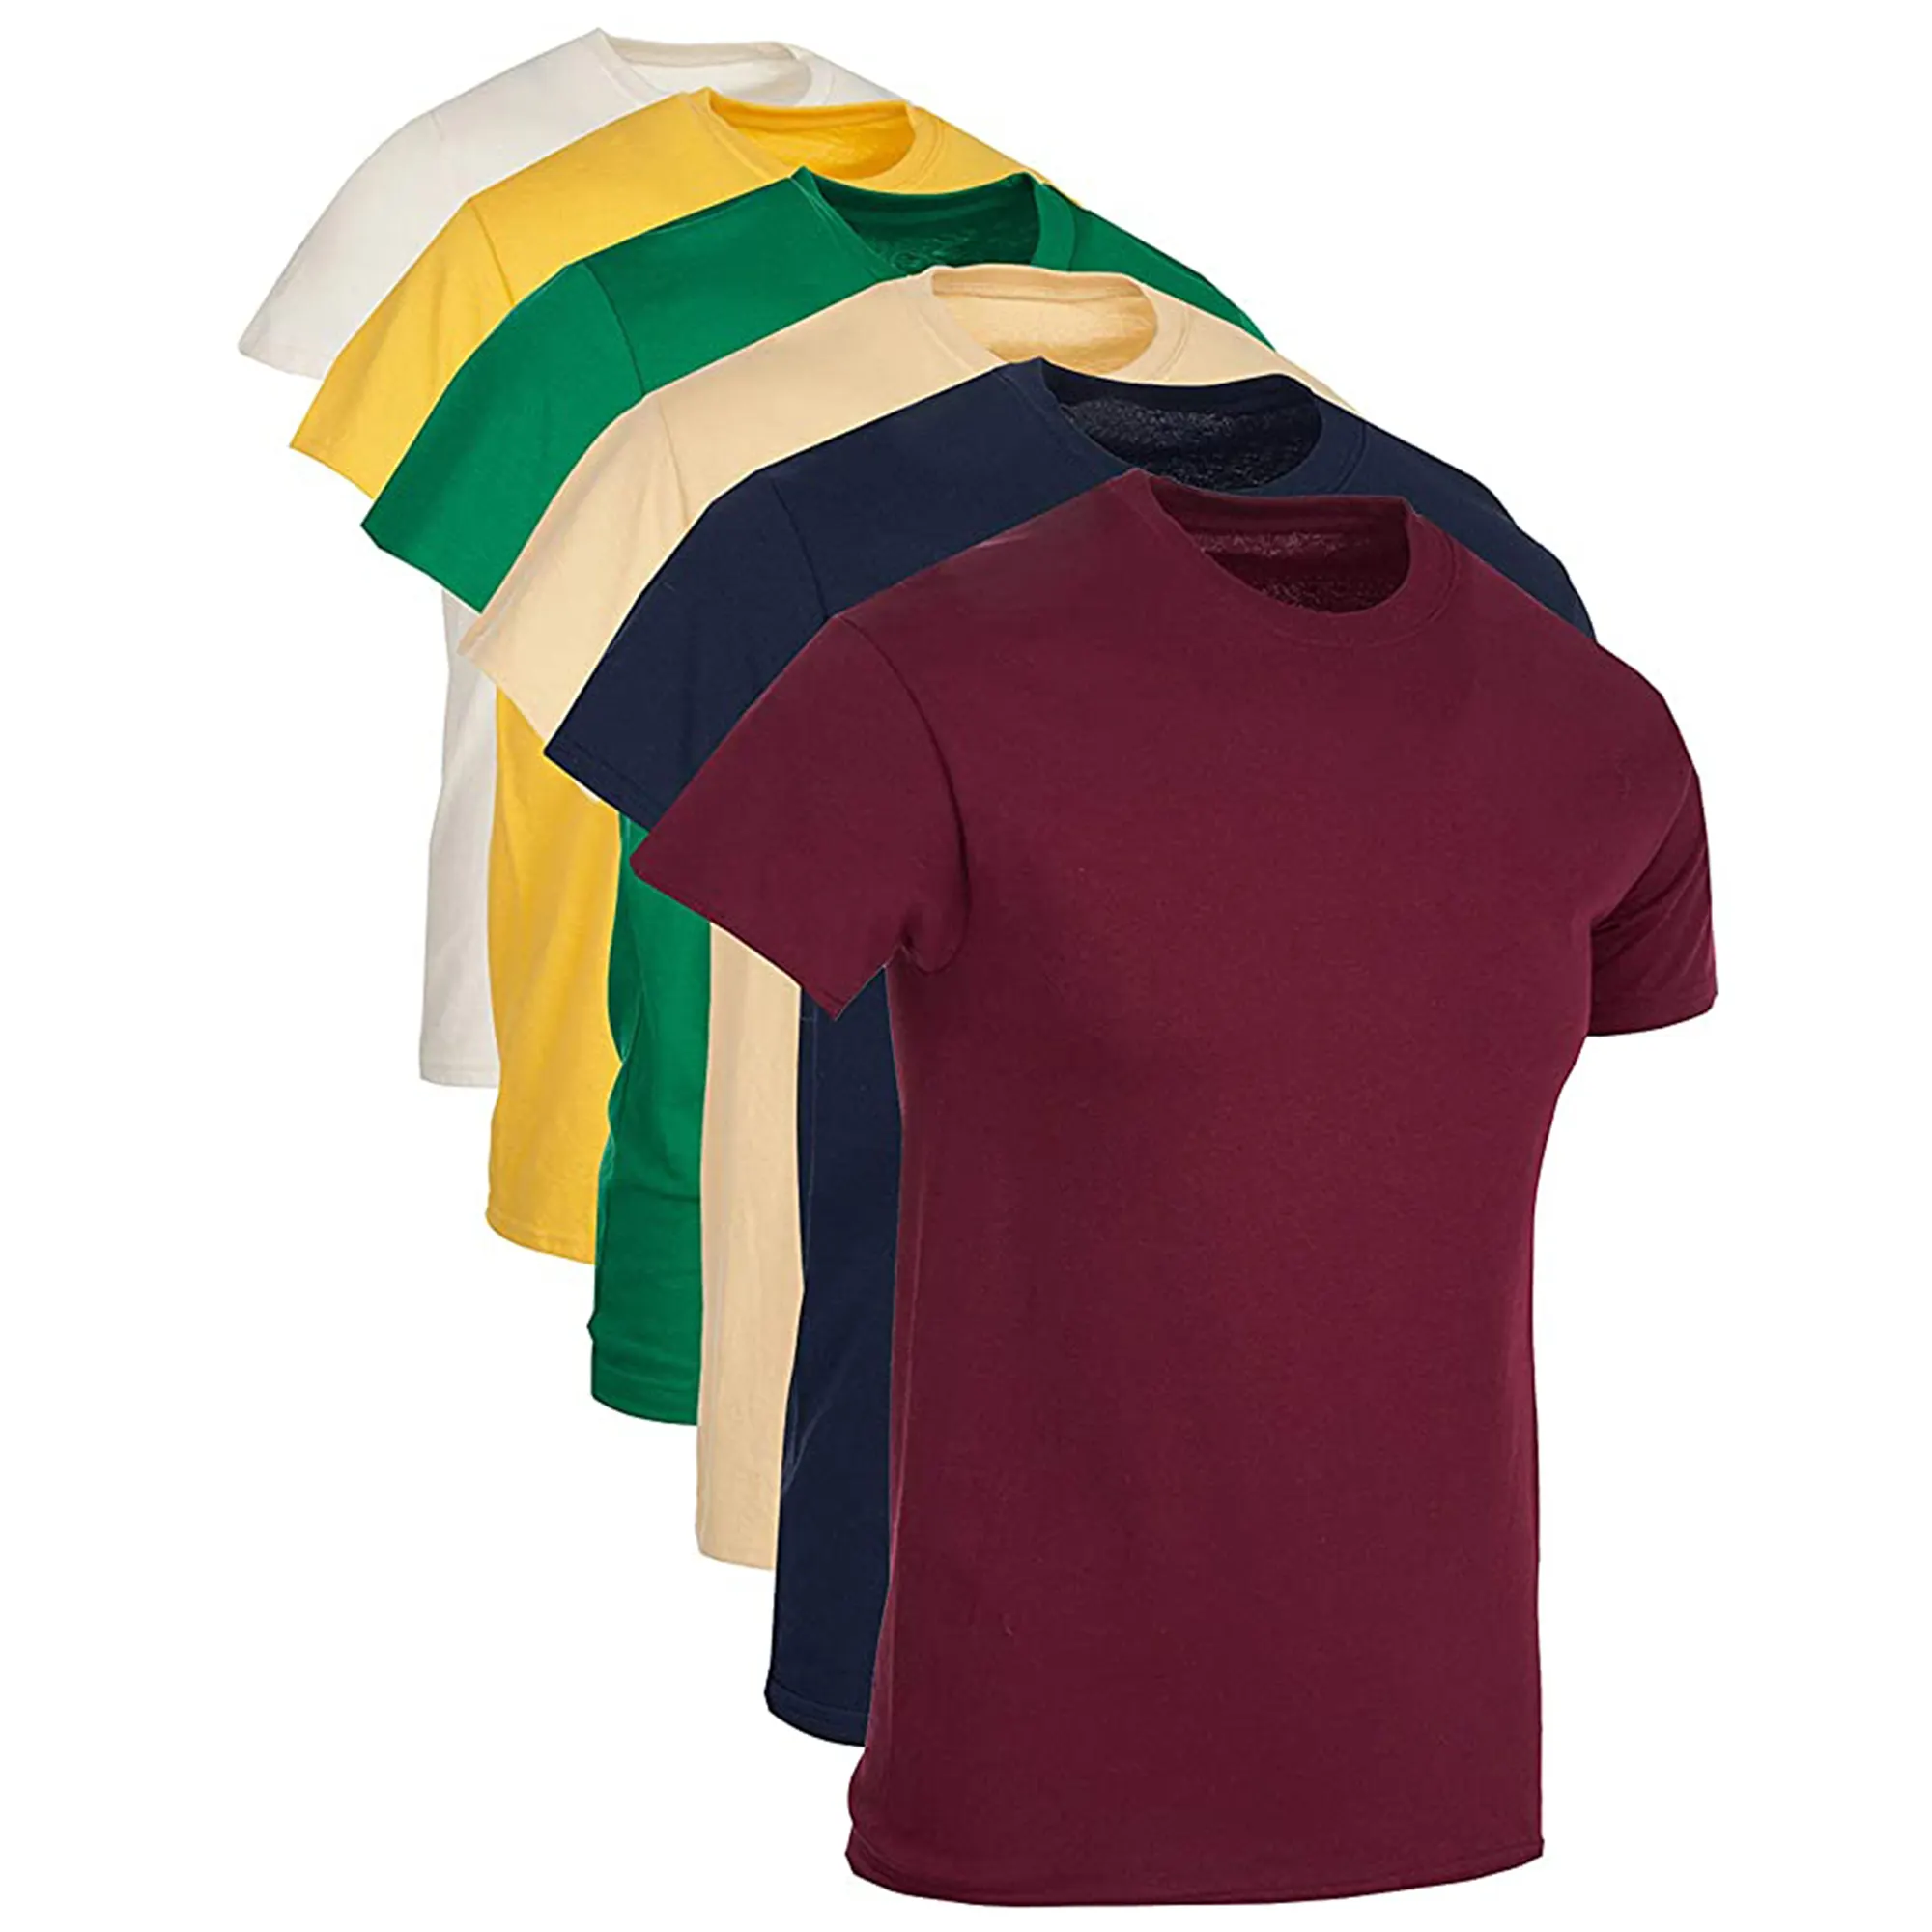 Cotton t-shirts- Gym T Shirts Round Neck T Shirt cheap tees plain blank T Shirt